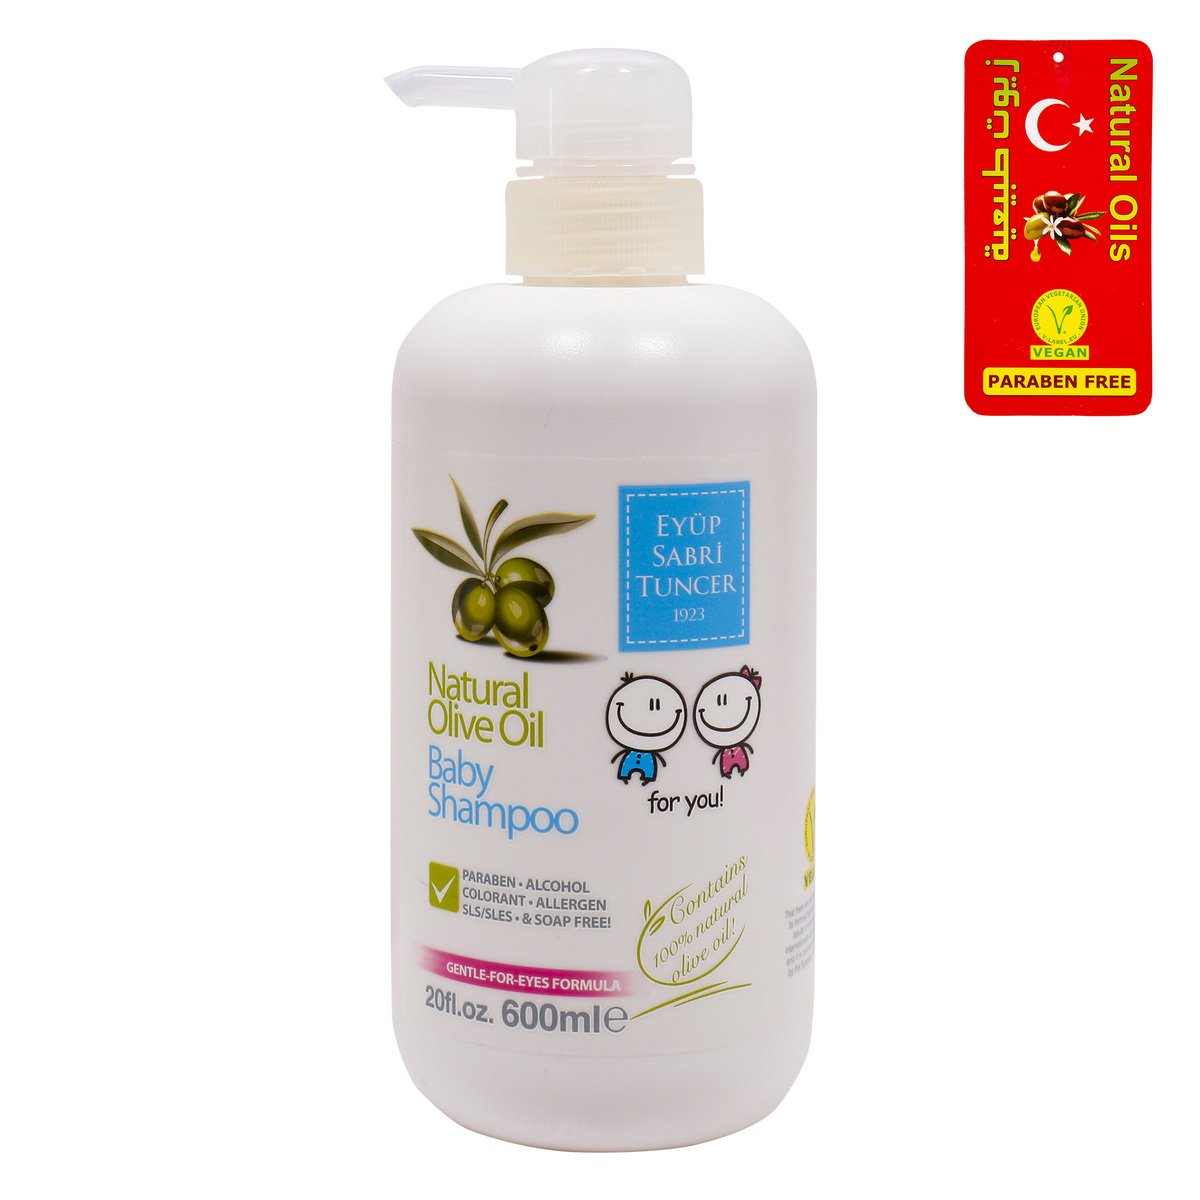 Eyup Sabri Tuncer Natural Olive Oil Baby Shampoo 600ml